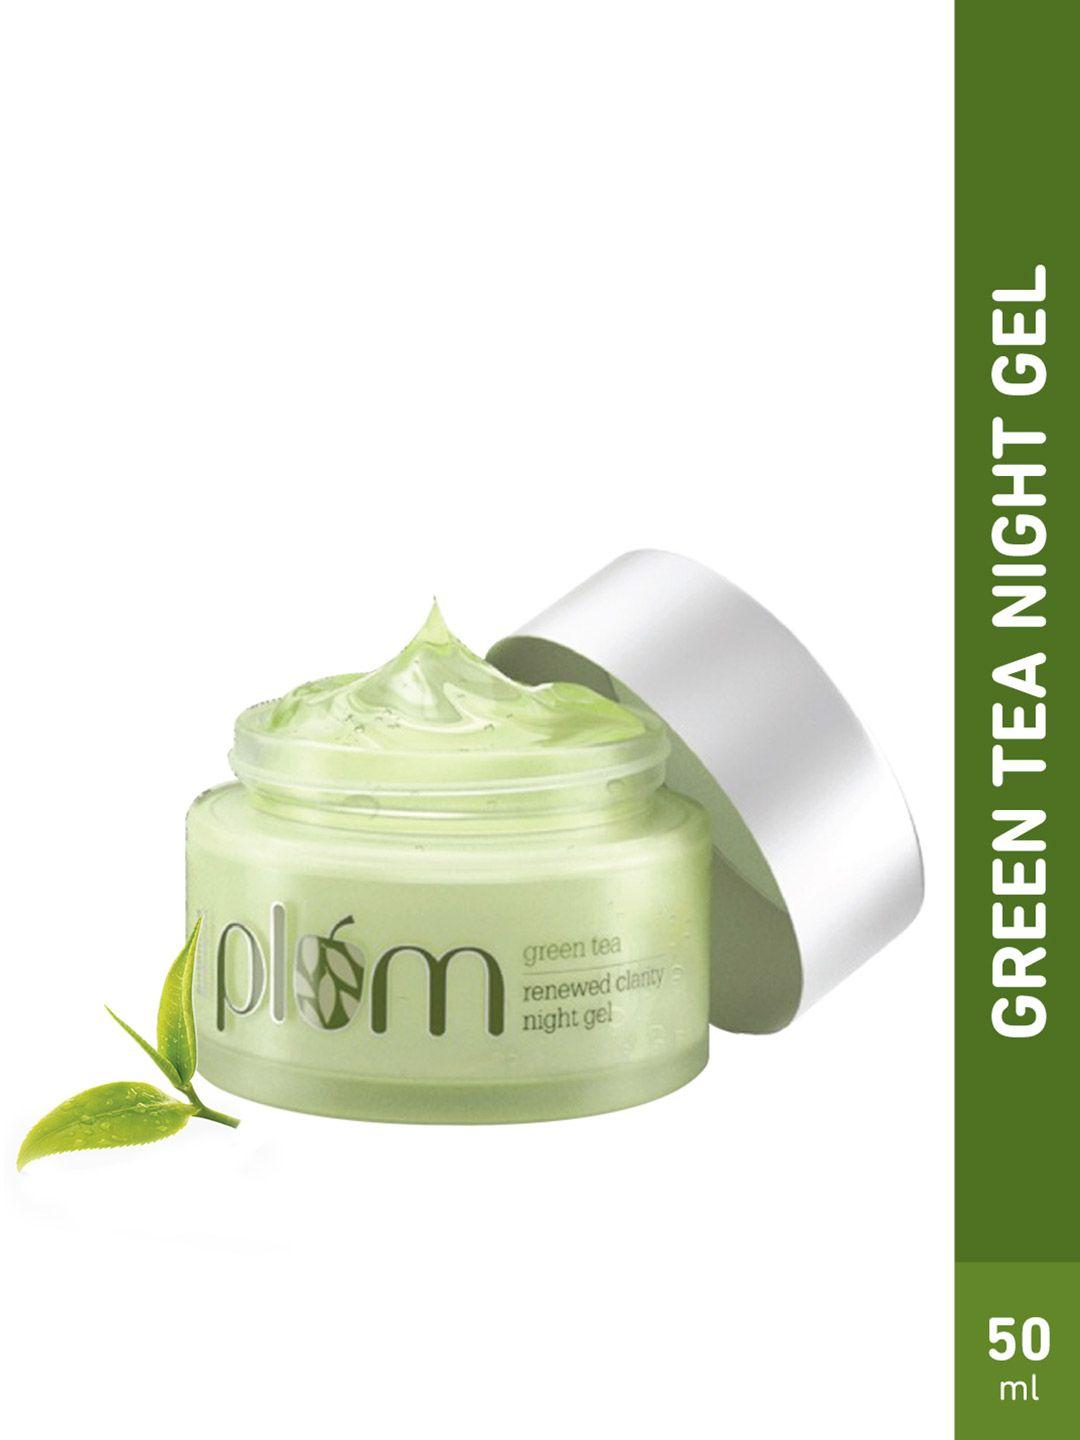 plum green tea range renewed clarity sustainable night gel 50ml